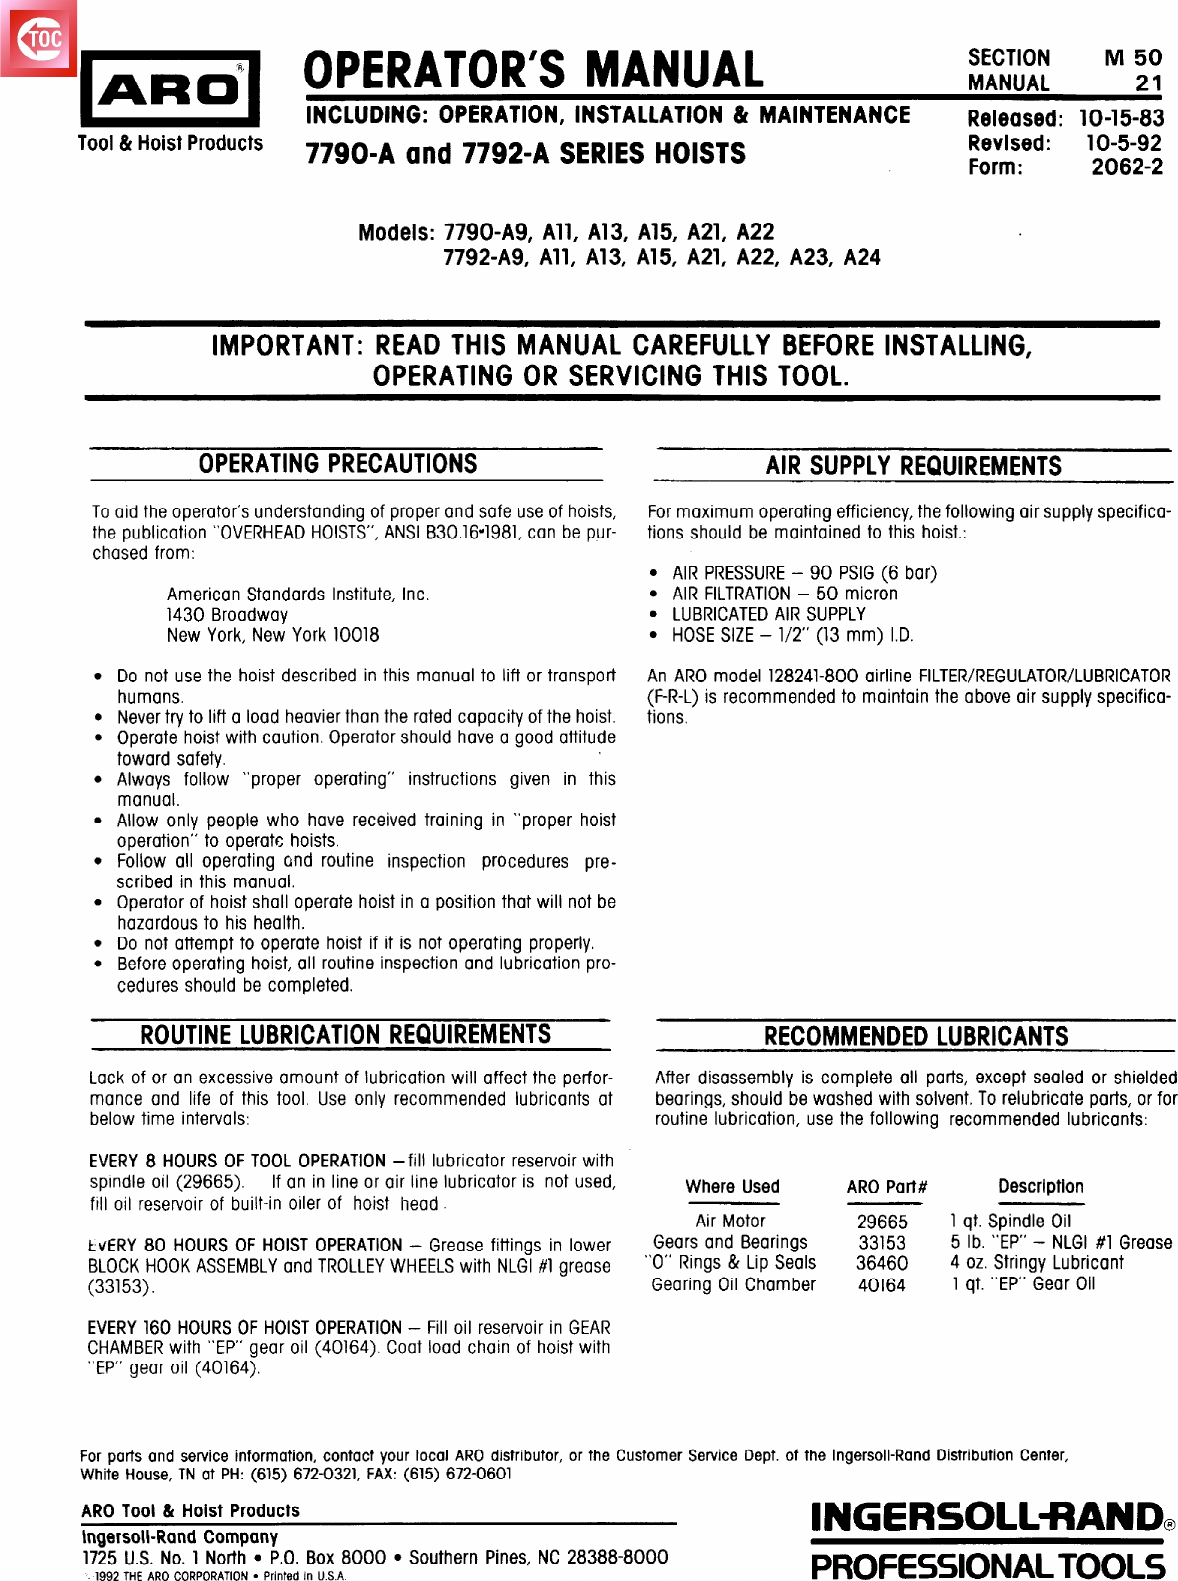 Page 1 of 12 - 49999-015 Form 2062-2 10/5/92 ARO-7790A-7792A-Hoist-Manual